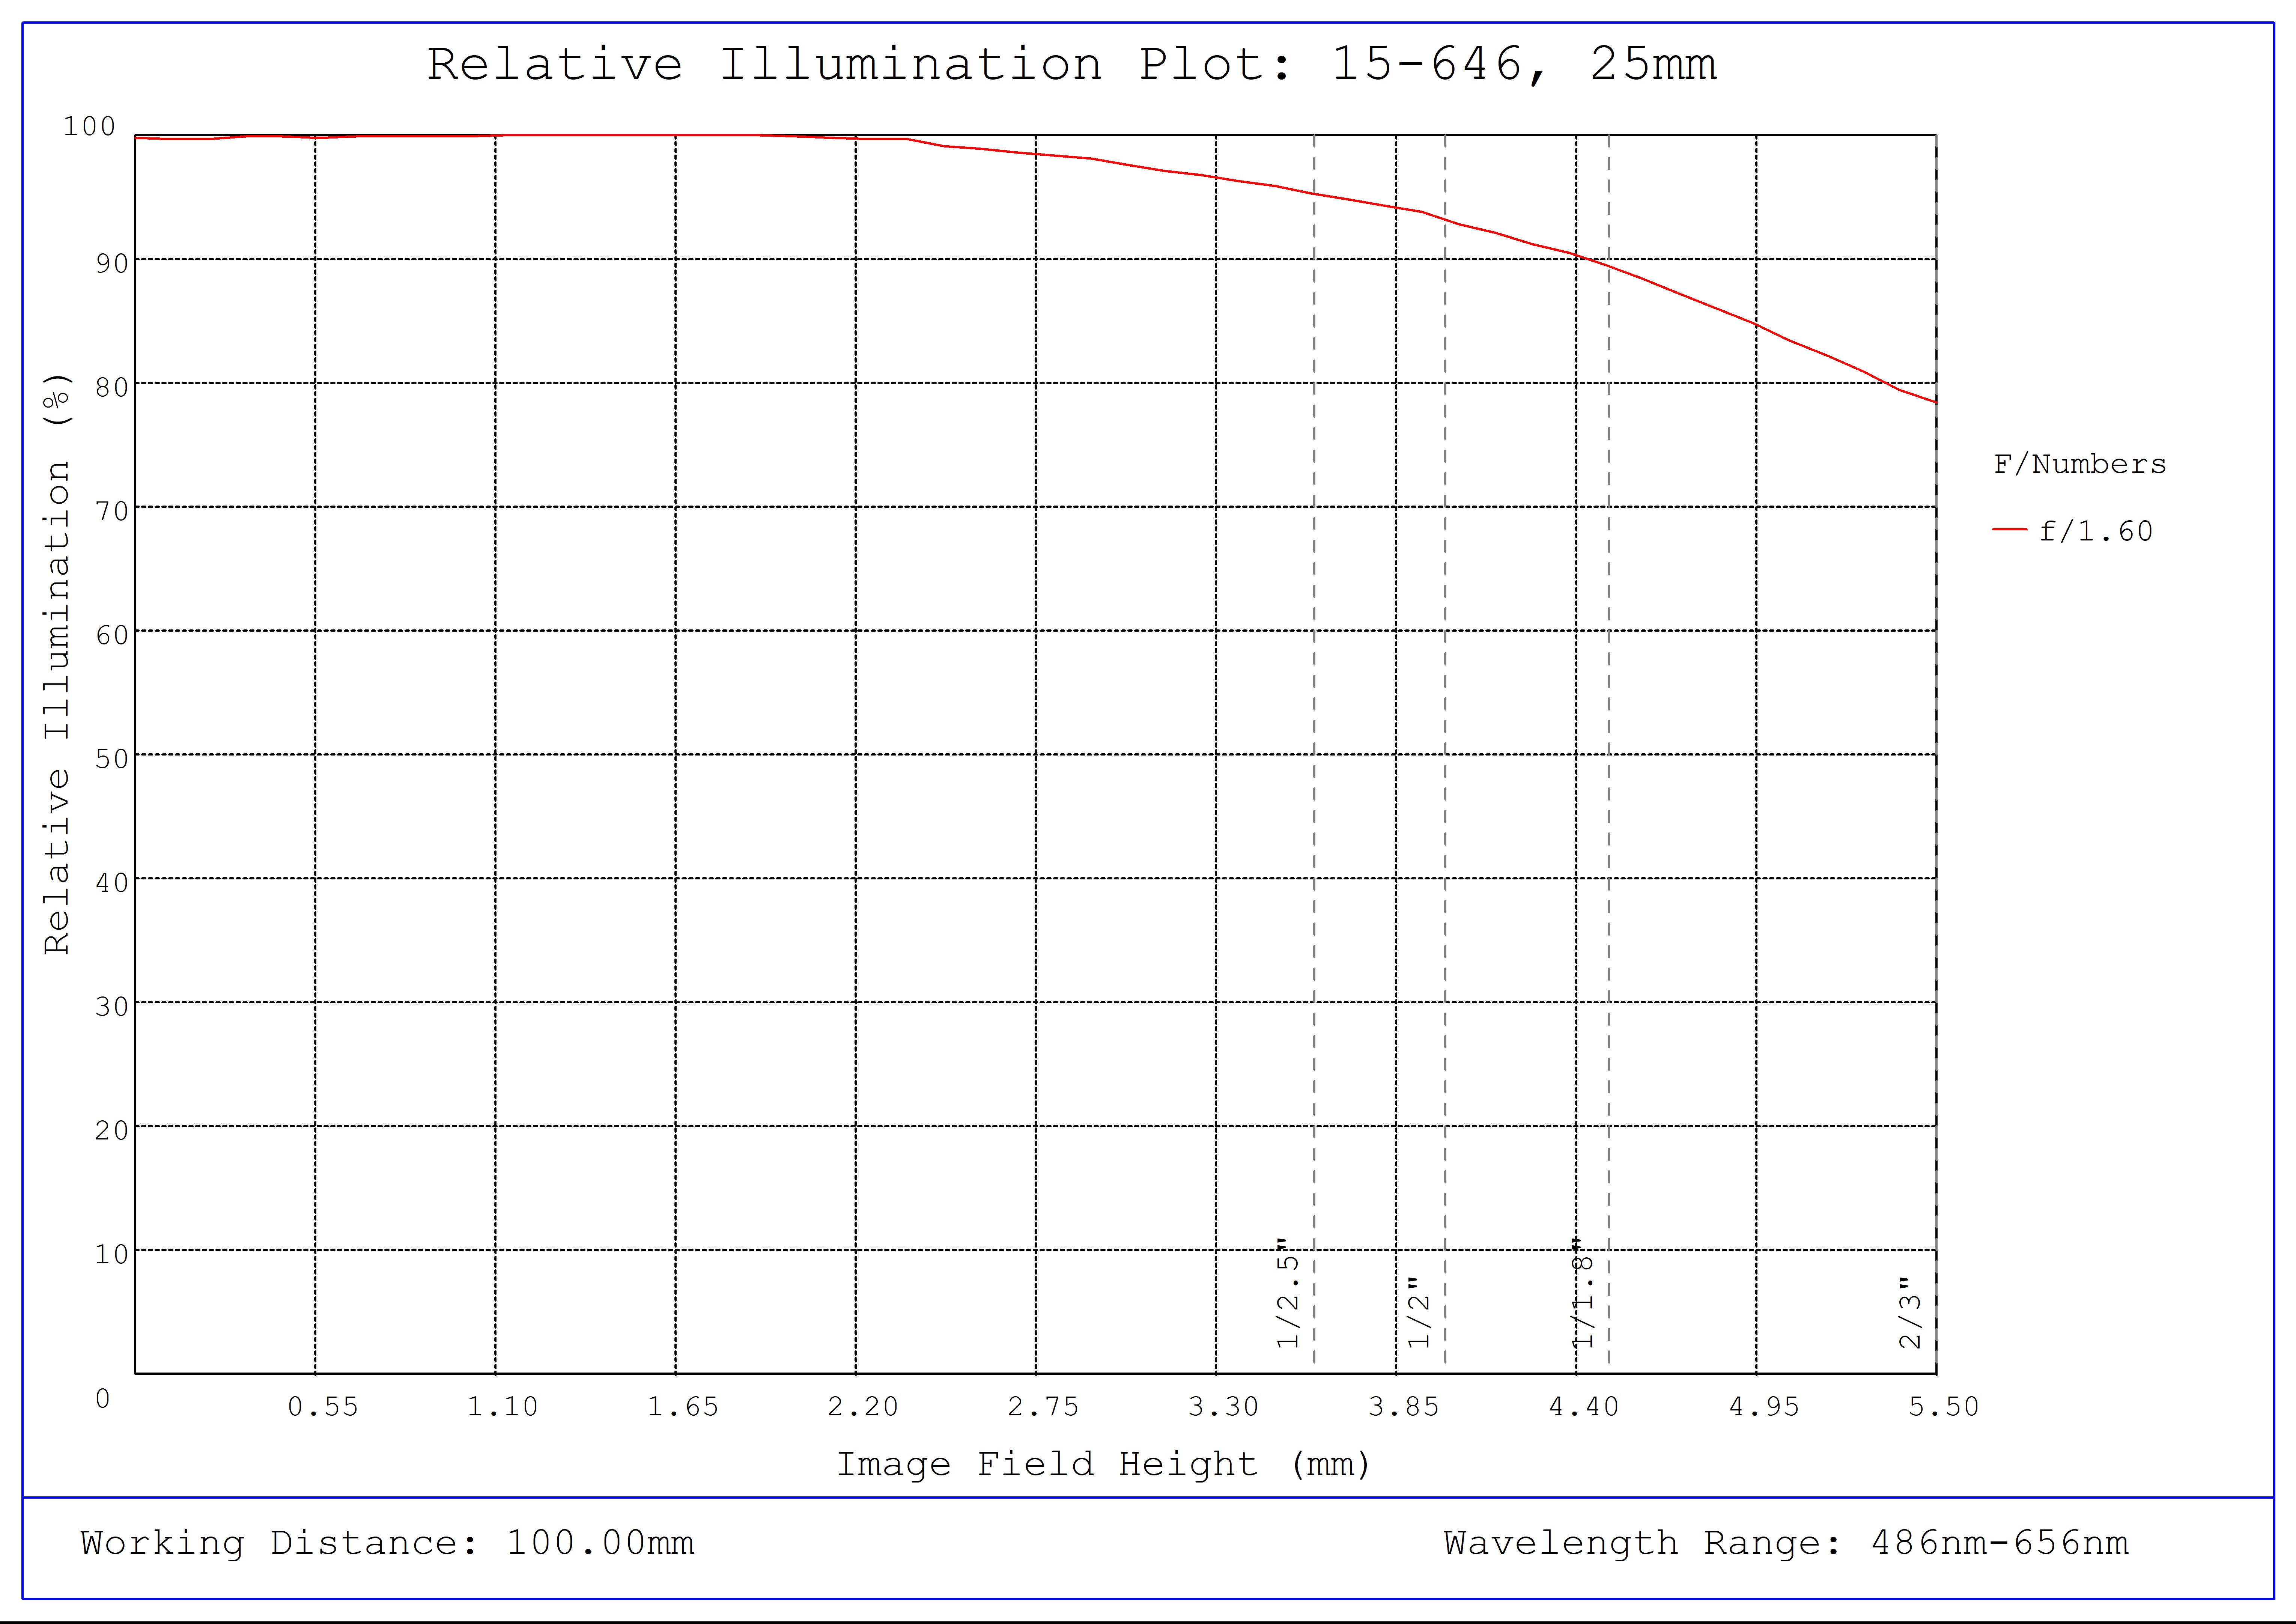 #15-646, 25mm, f/1.6 Cw Series Fixed Focal Length Lens, Relative Illumination Plot